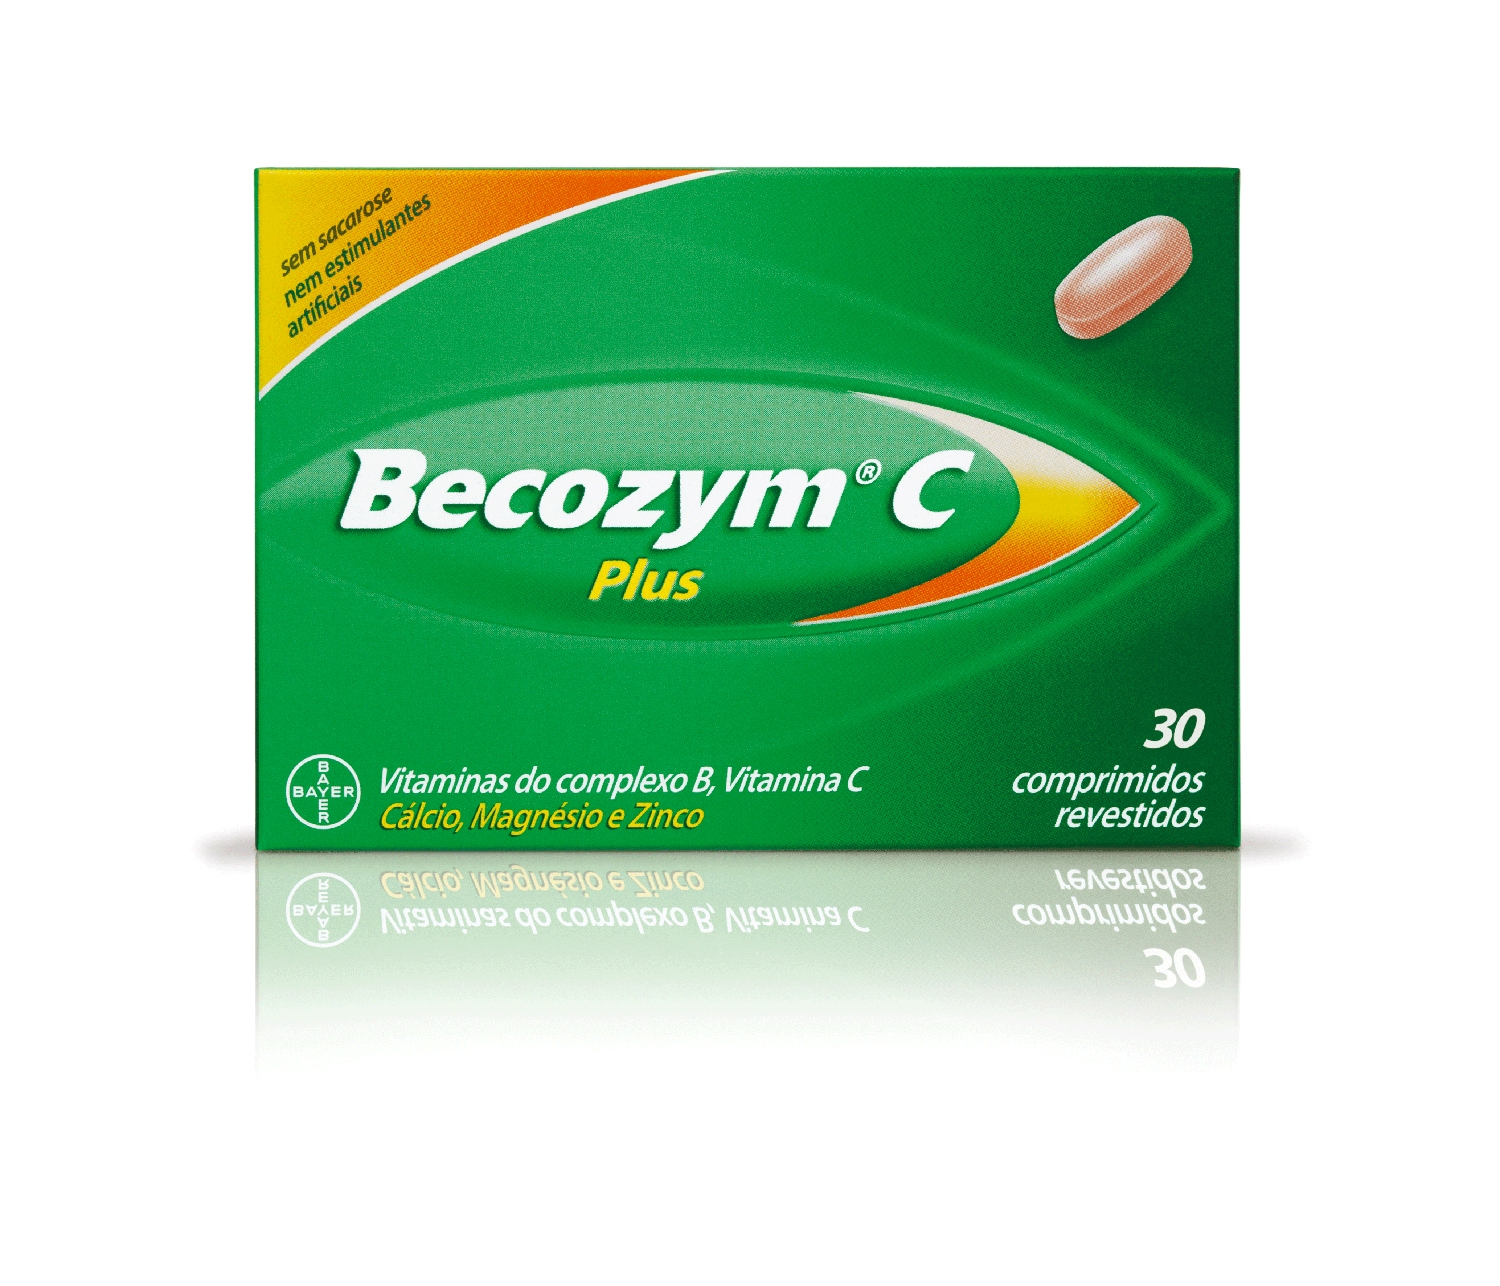 Becozym® C Plus